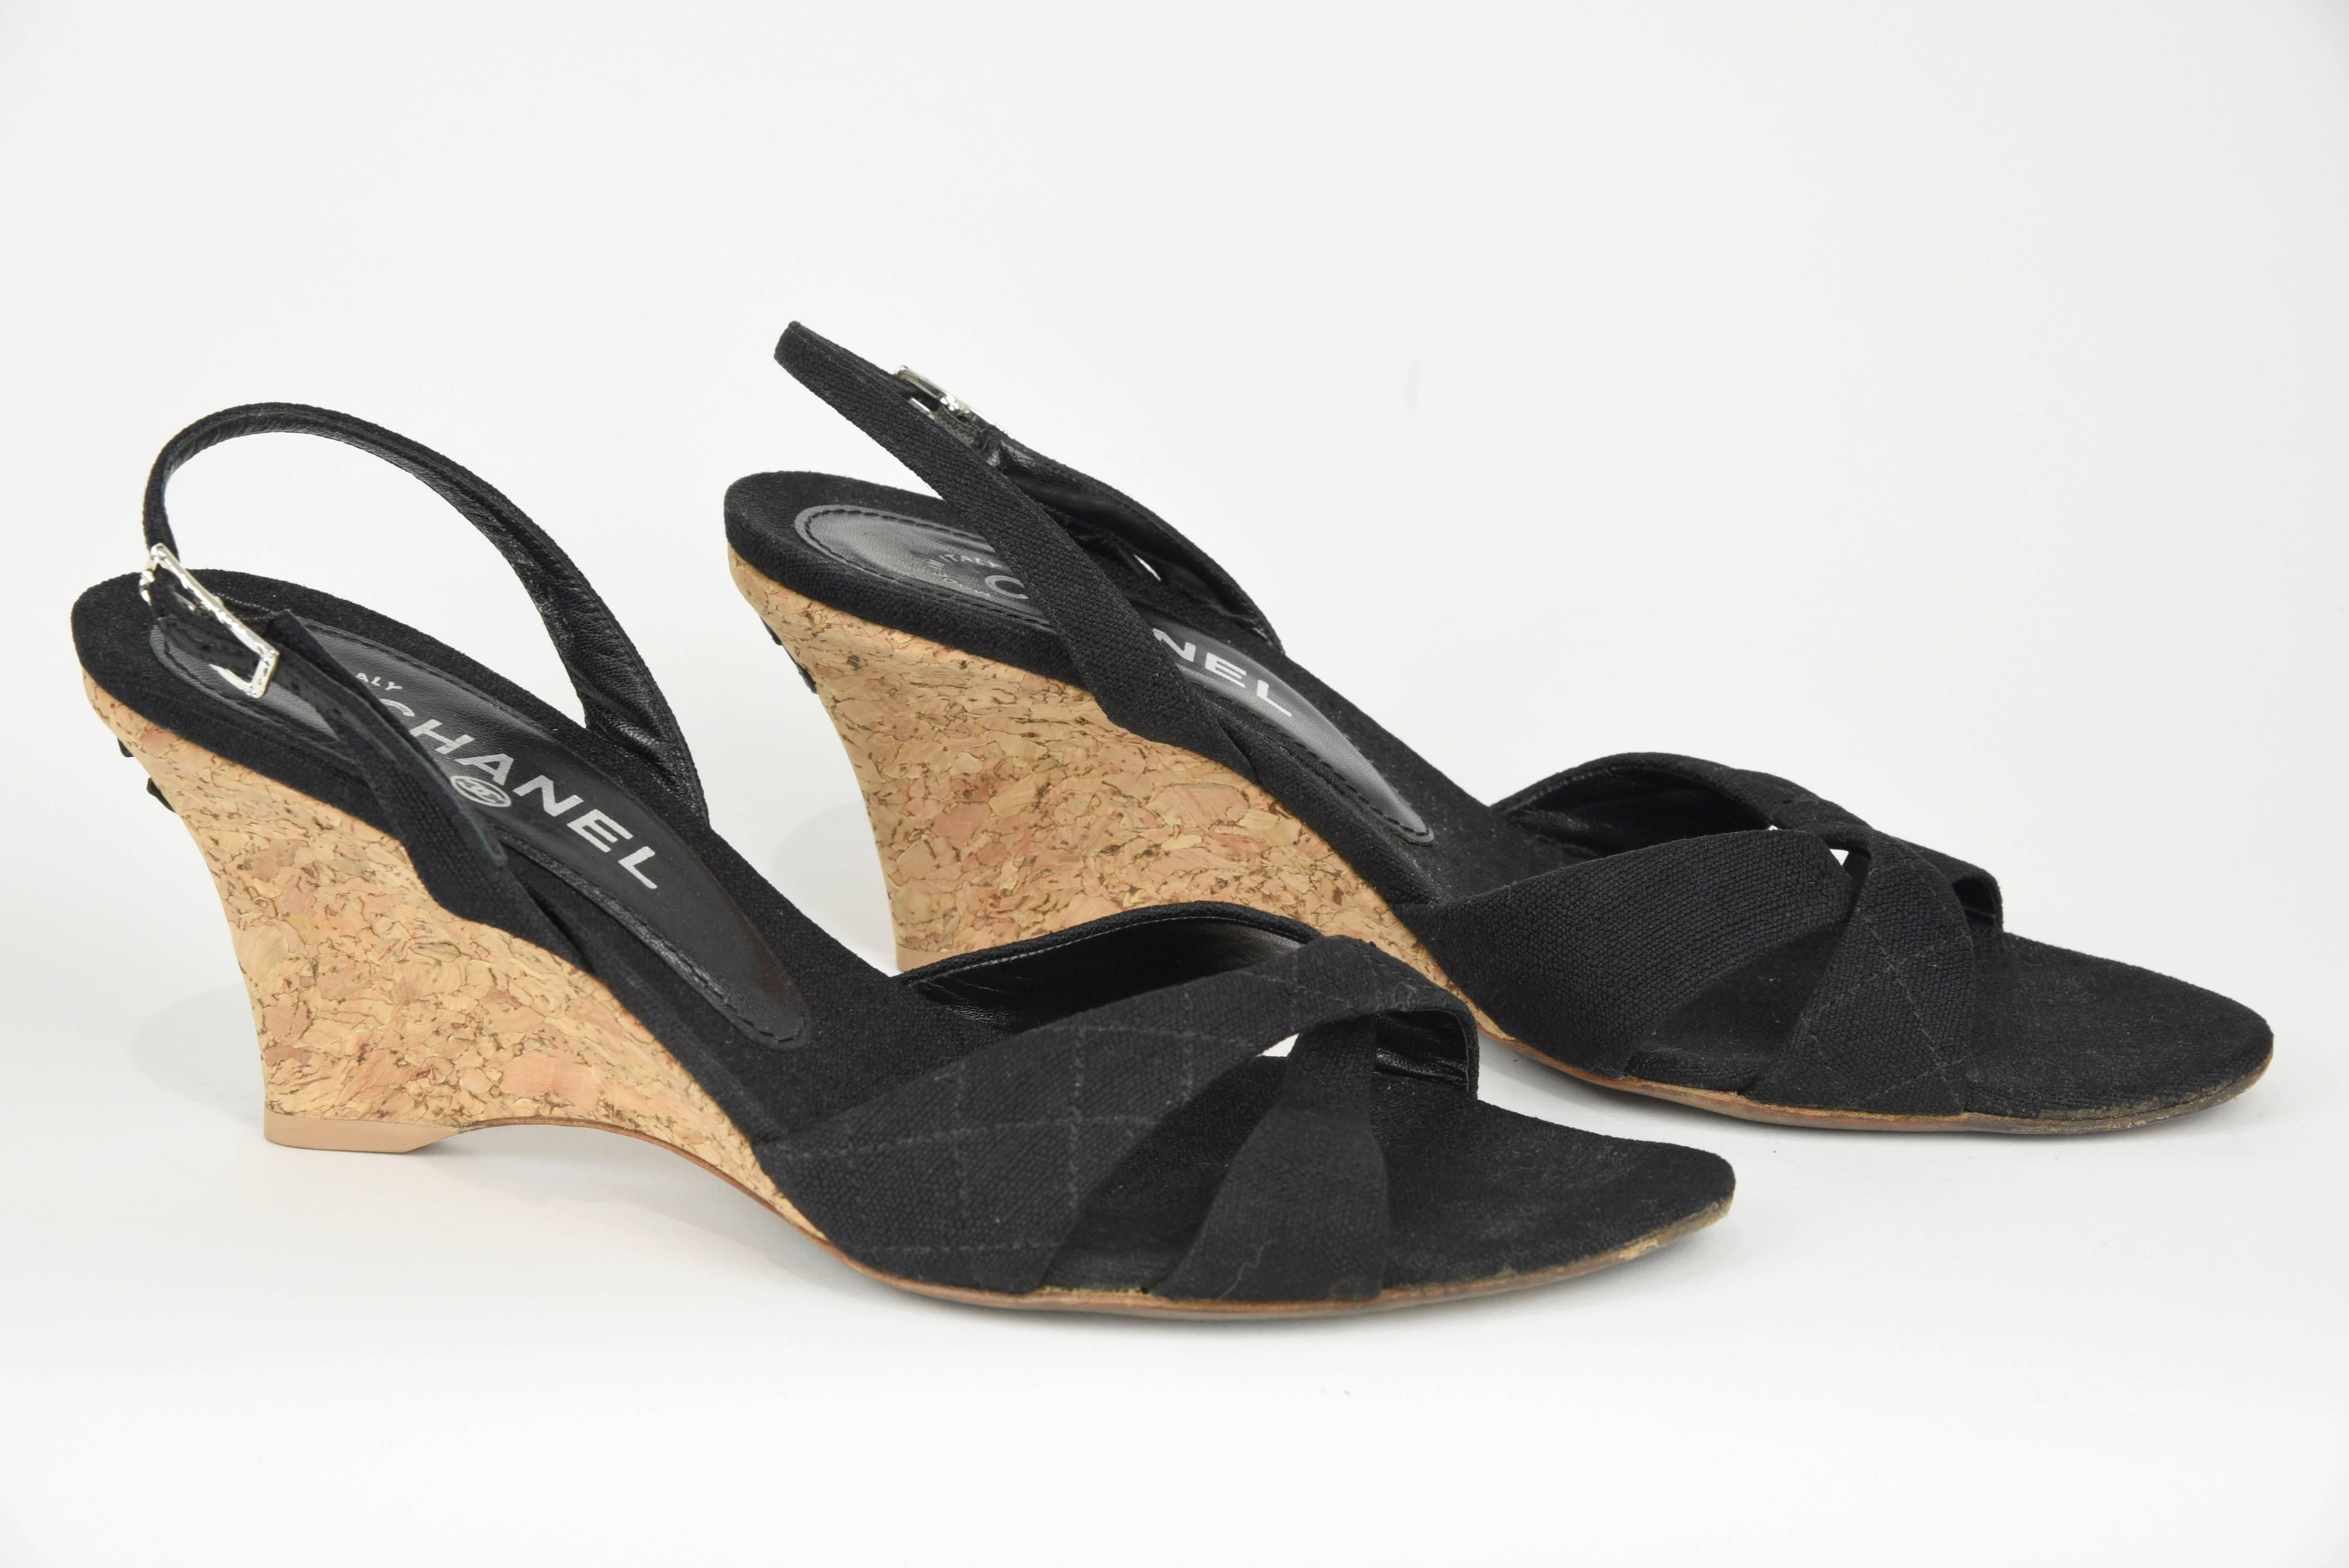 Pretty and flattering summer heels.
Size FR 41
Heels 3"